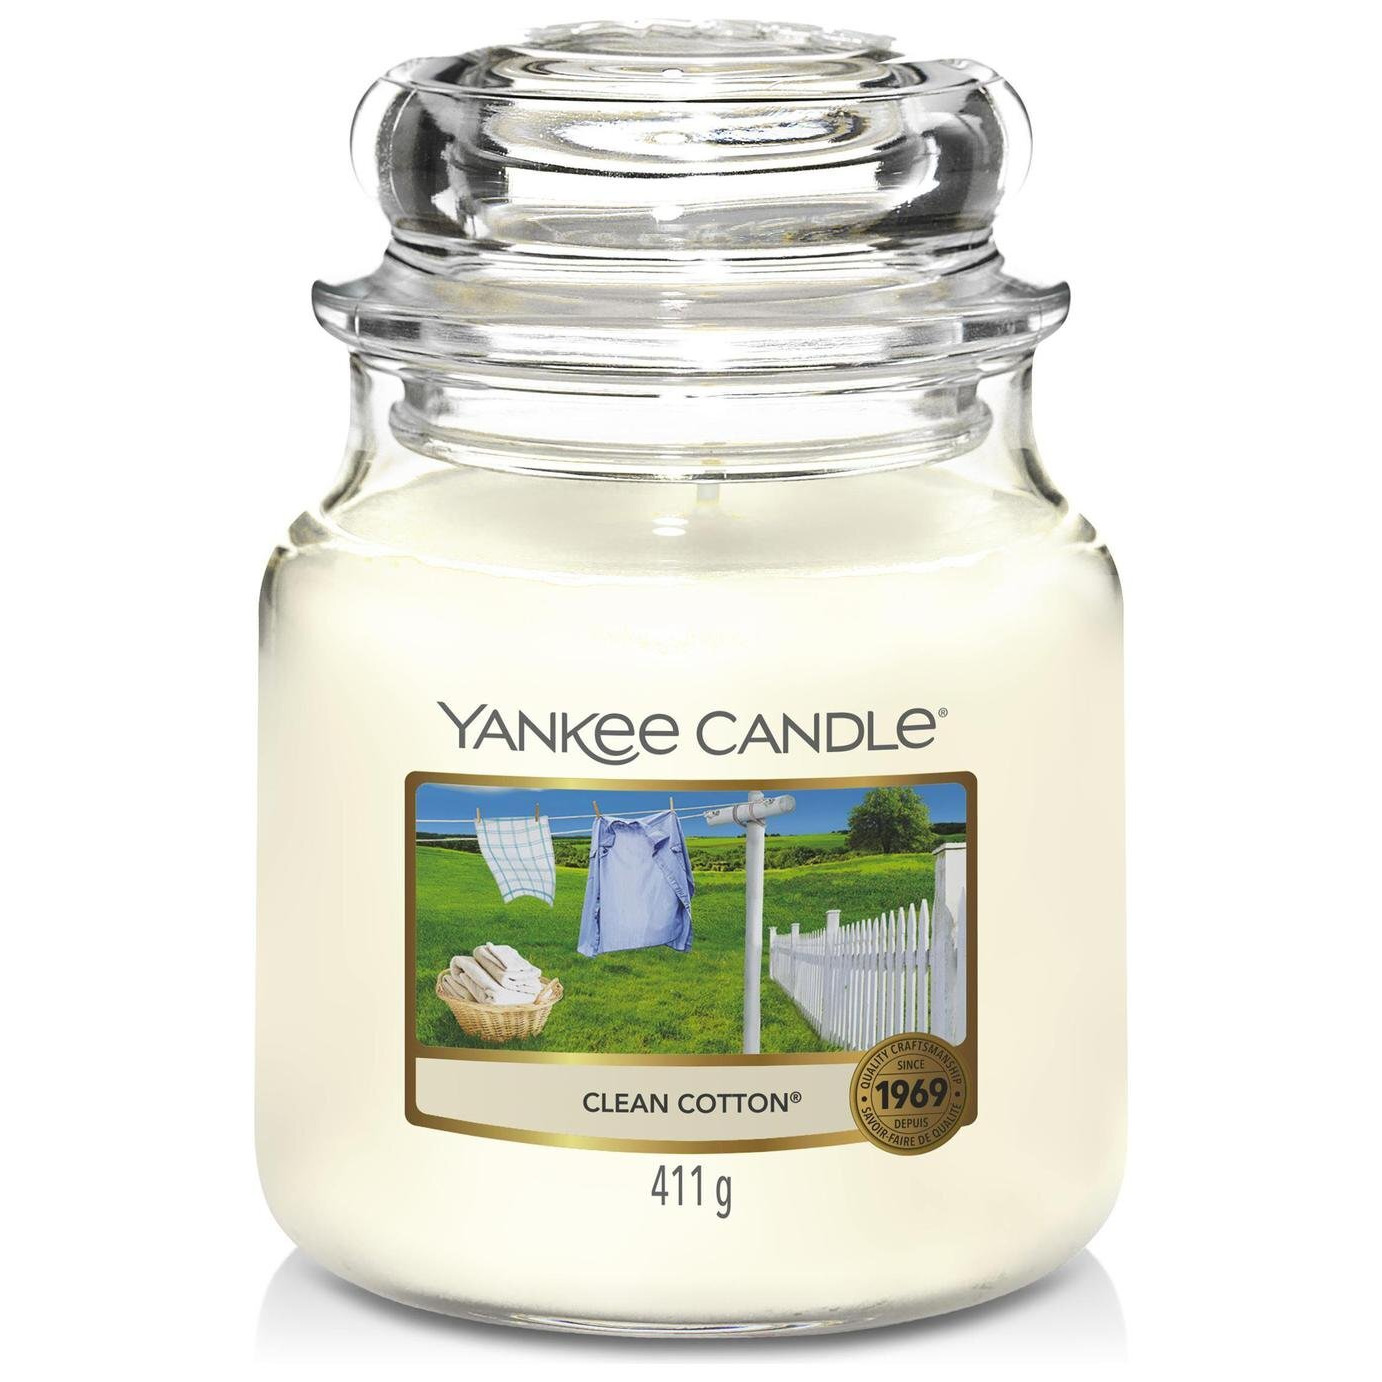 Yankee Candle Medium Jar Candle - Clean Cotton - image 1